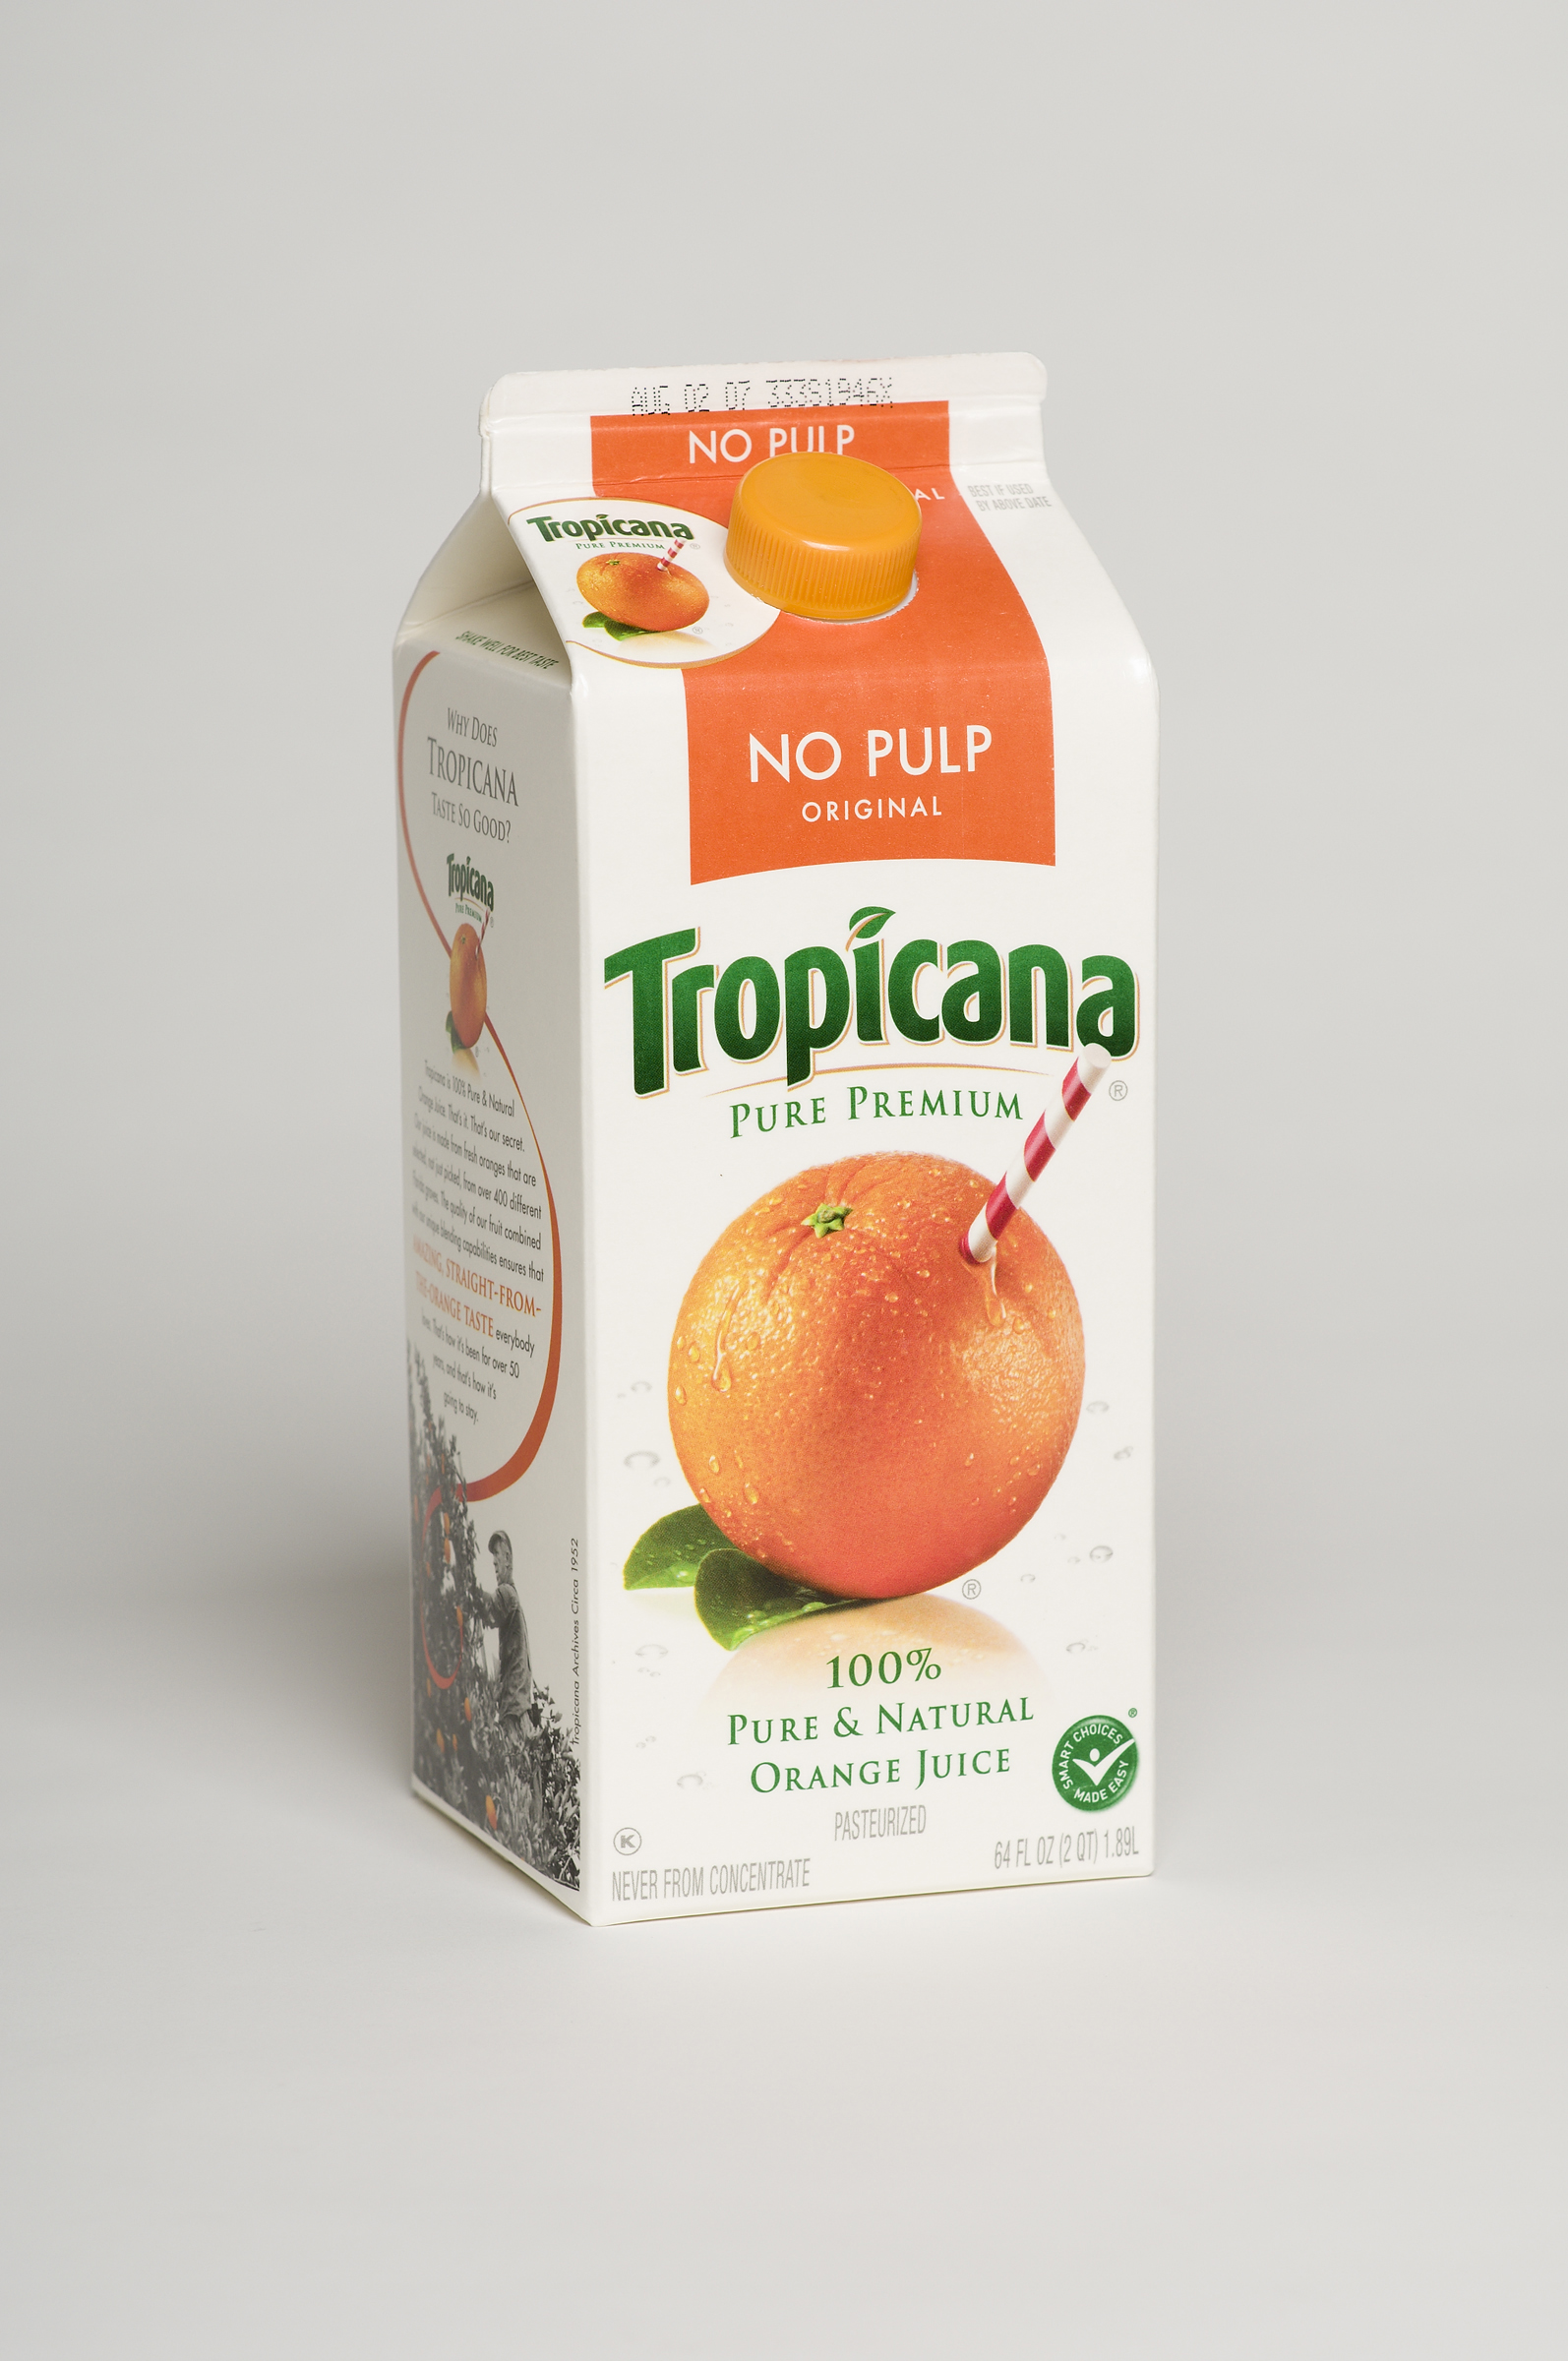 does costco have tropicana apple juice